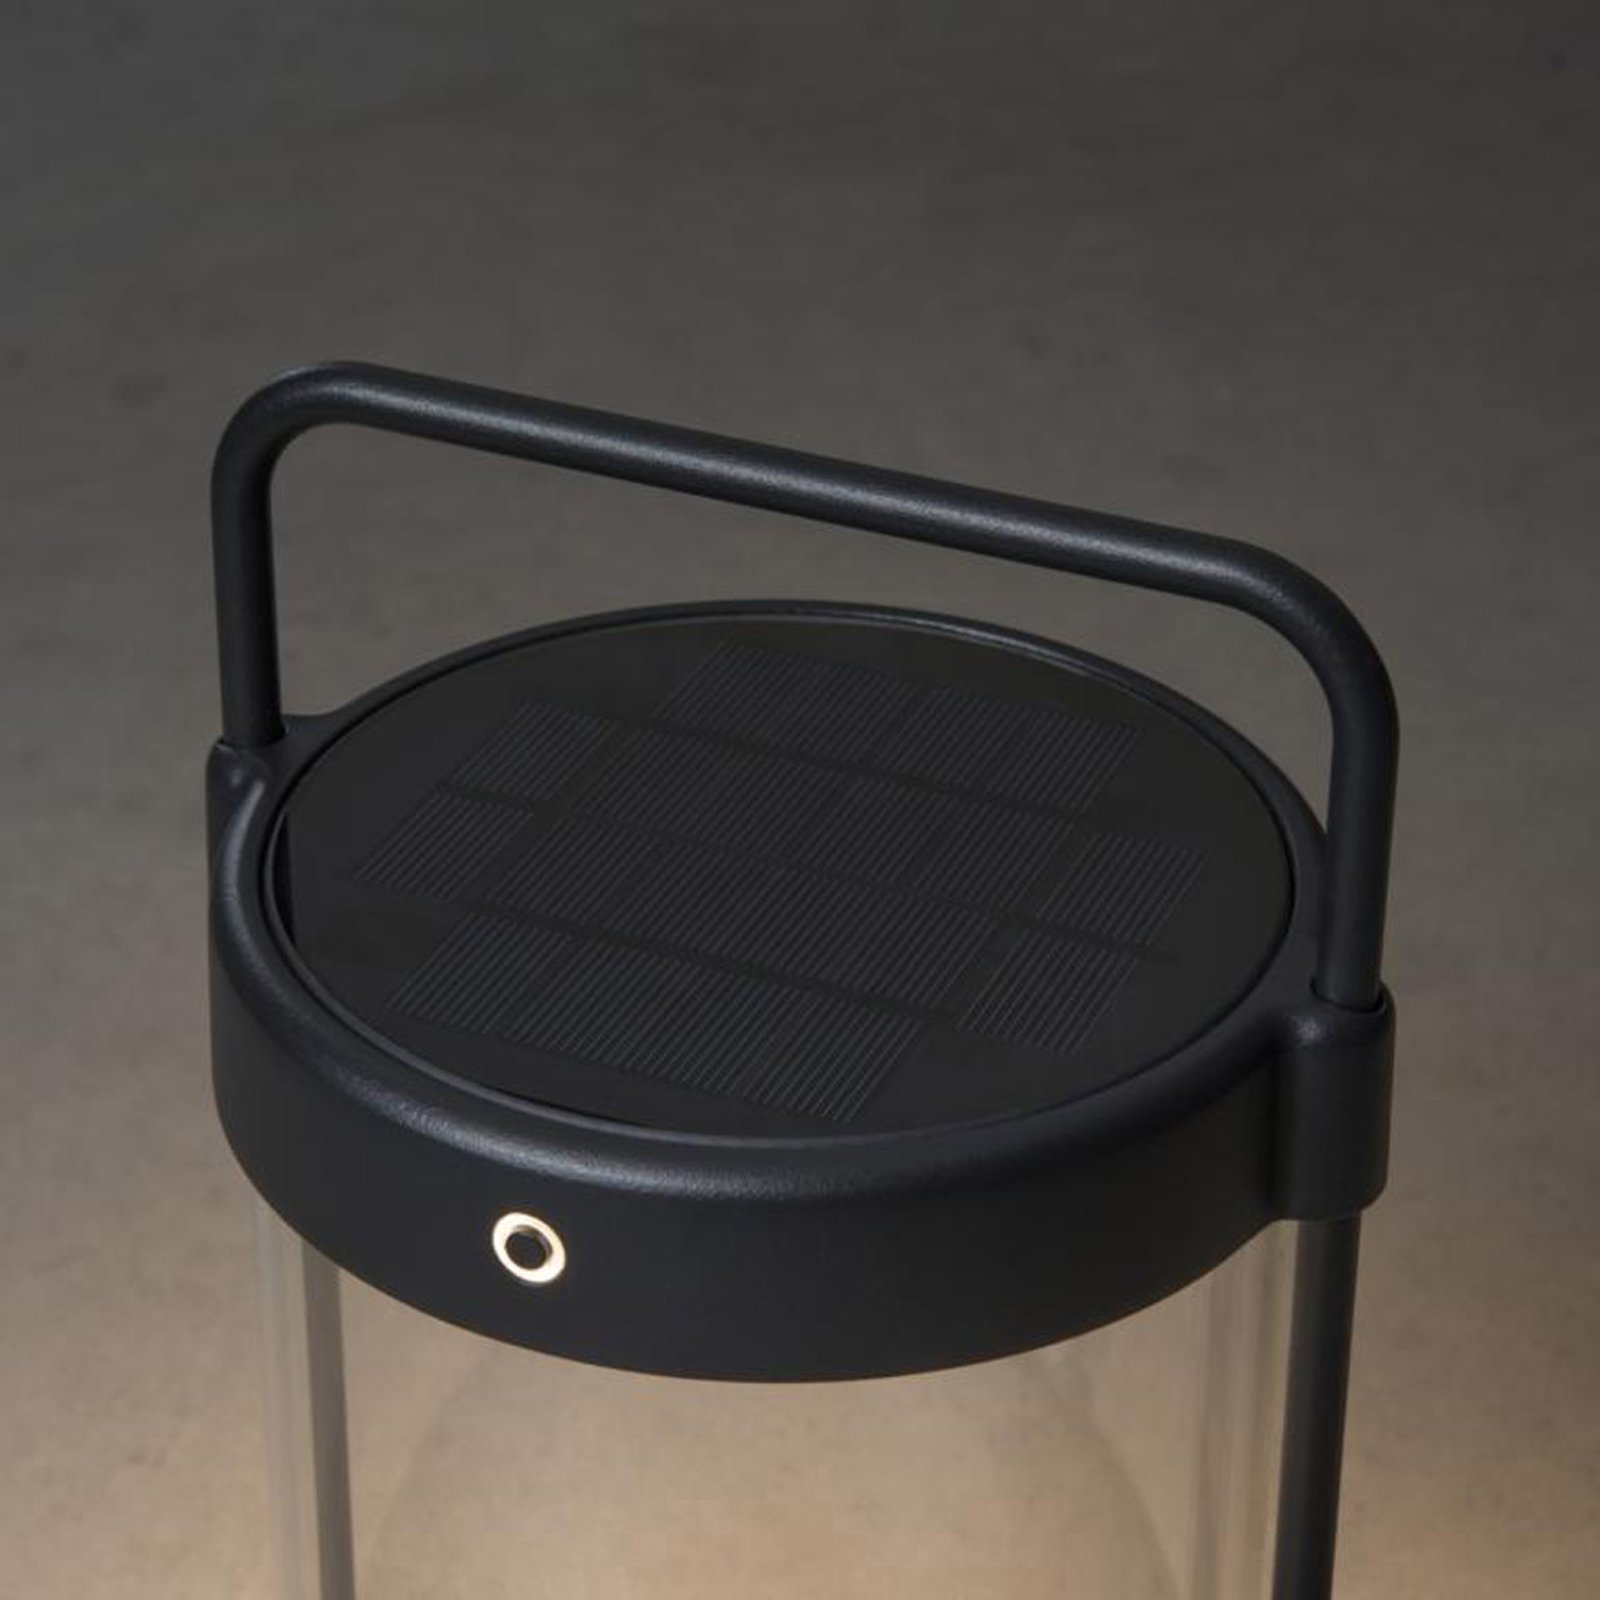 Crotone LED solar lantern, dimmable, USB